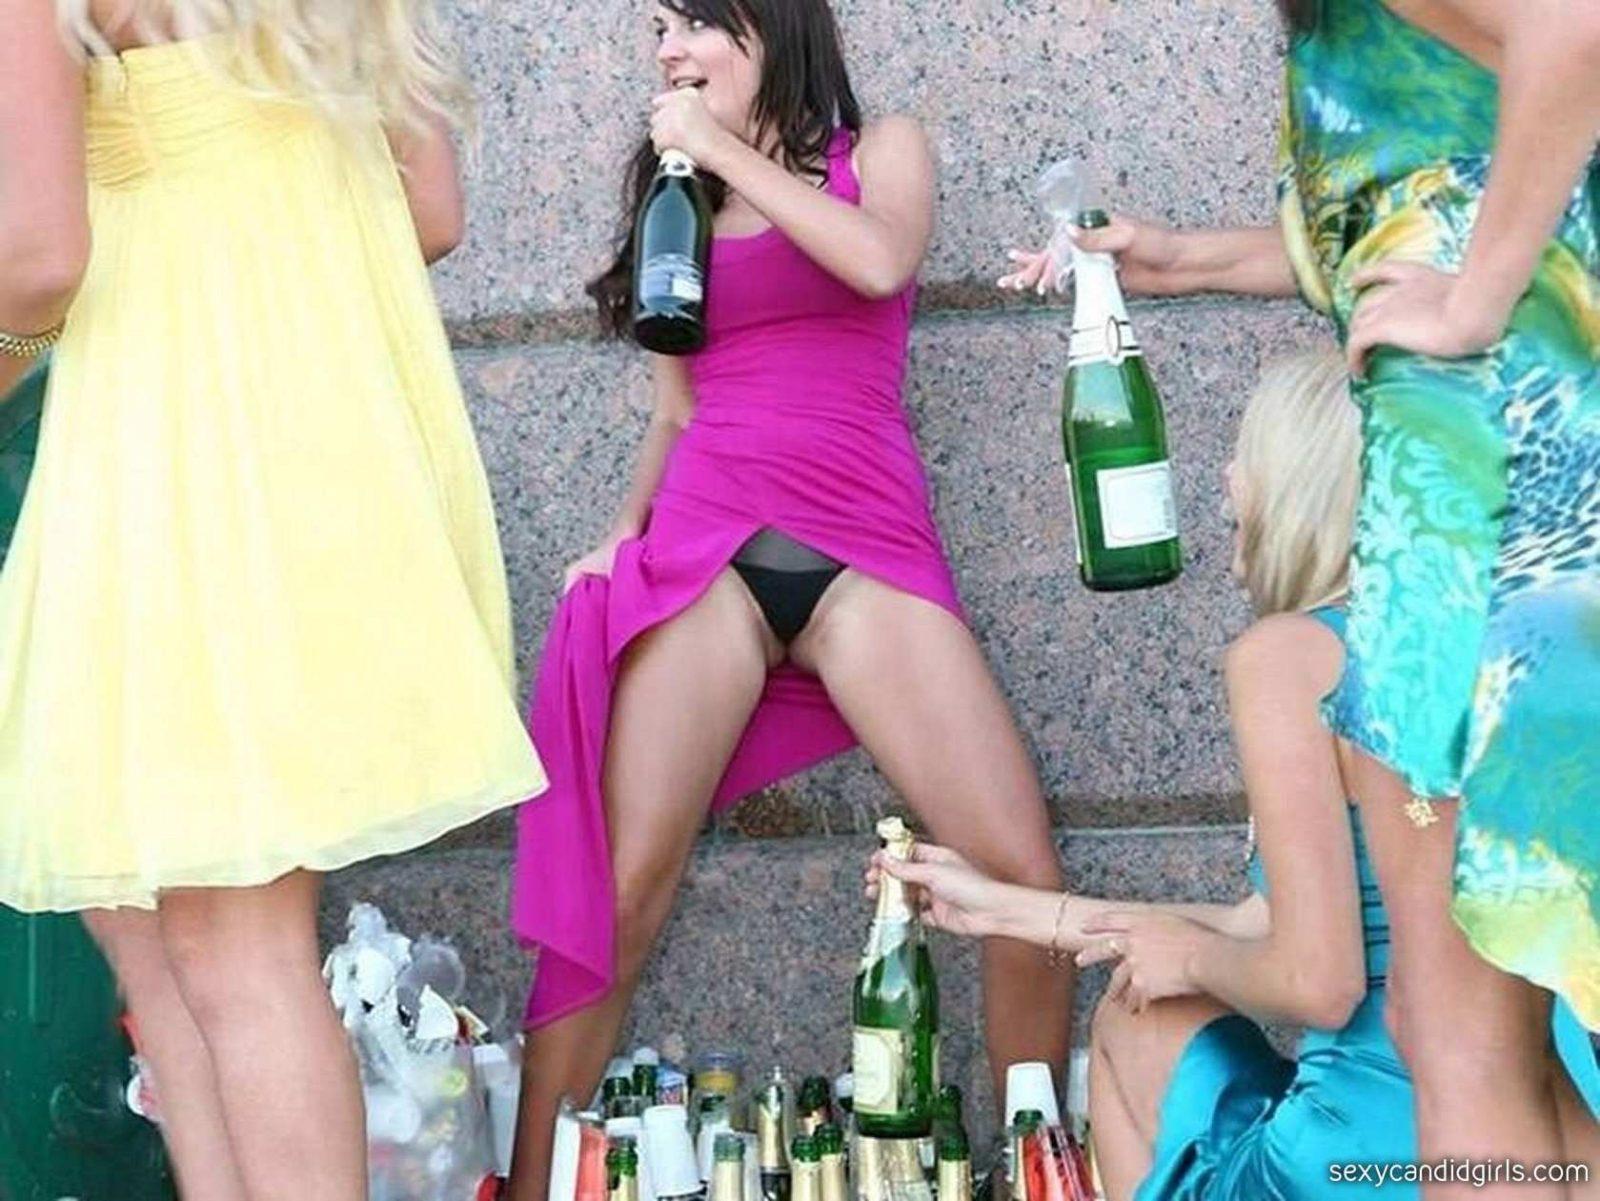 Candid Drunk Girls Upskirt - Drunk Girls Showing Panties â€“ Sexy Candid Girls